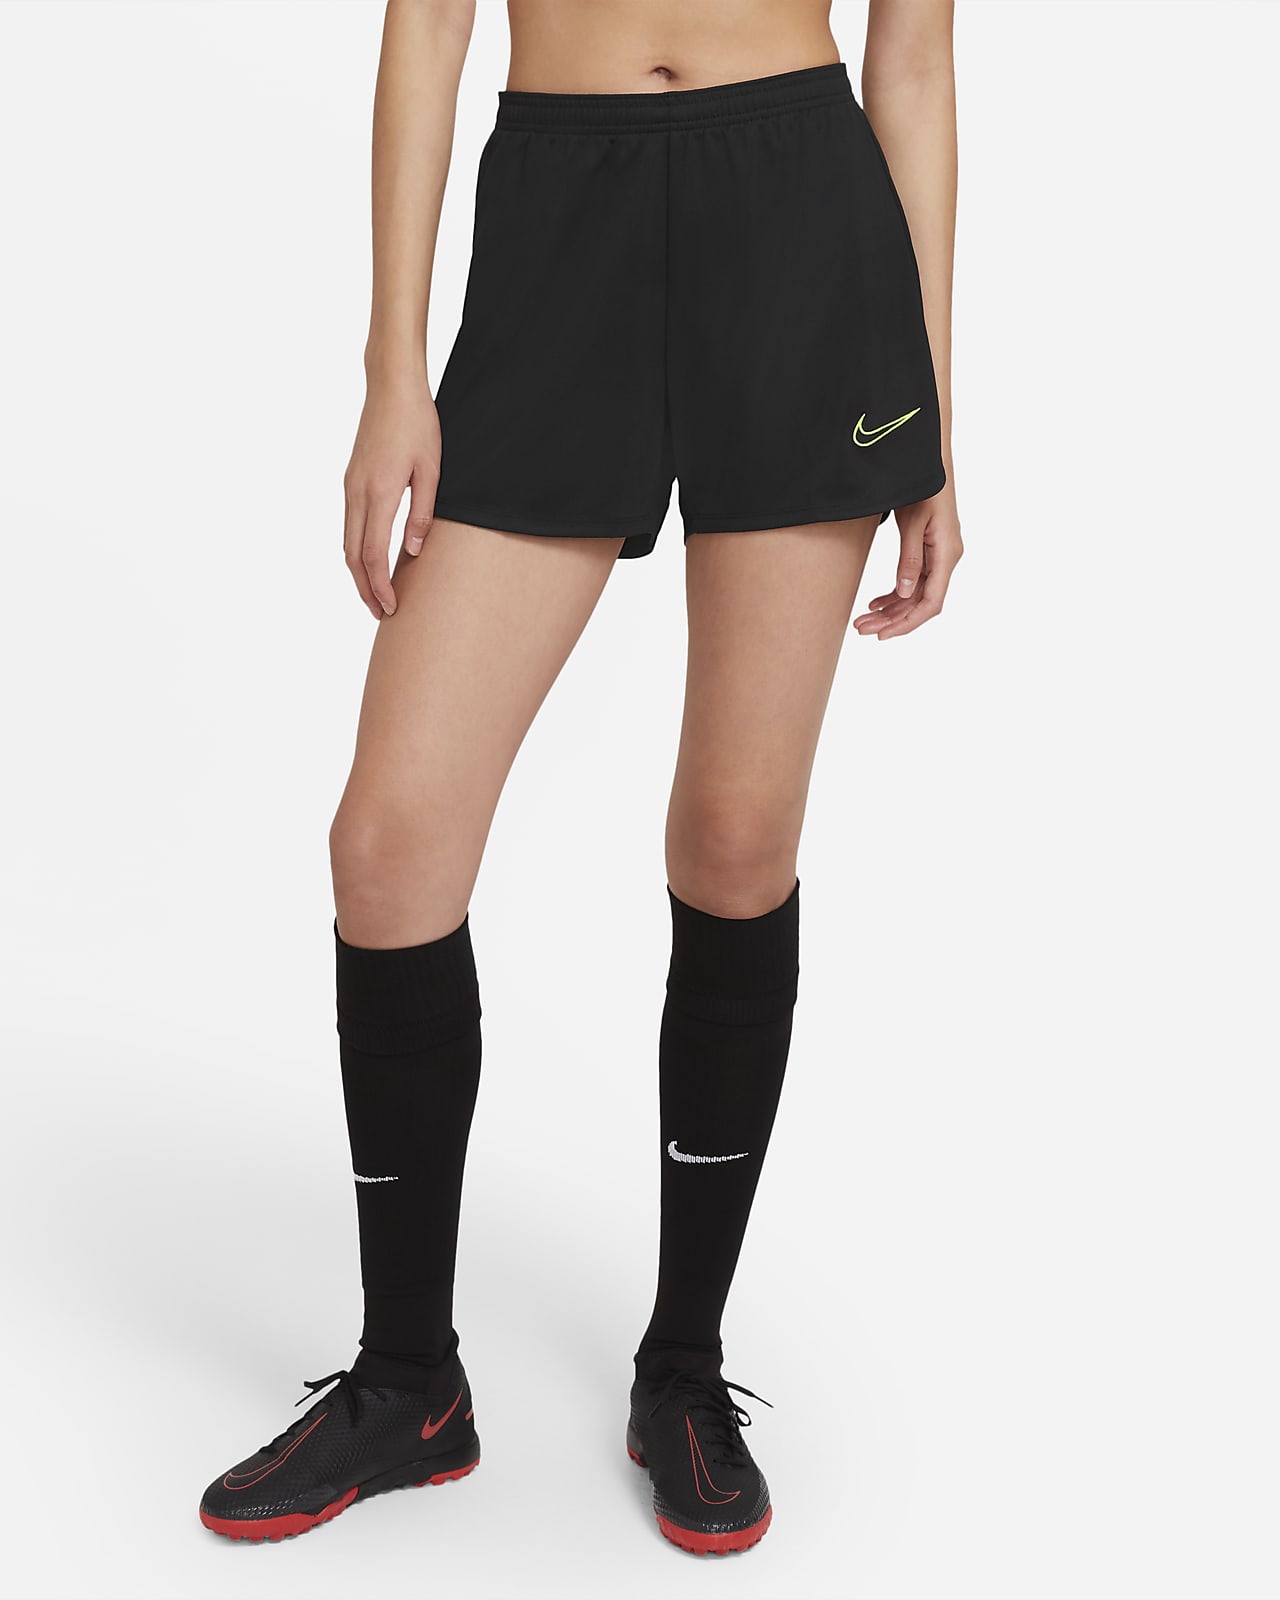 nike football shorts womens